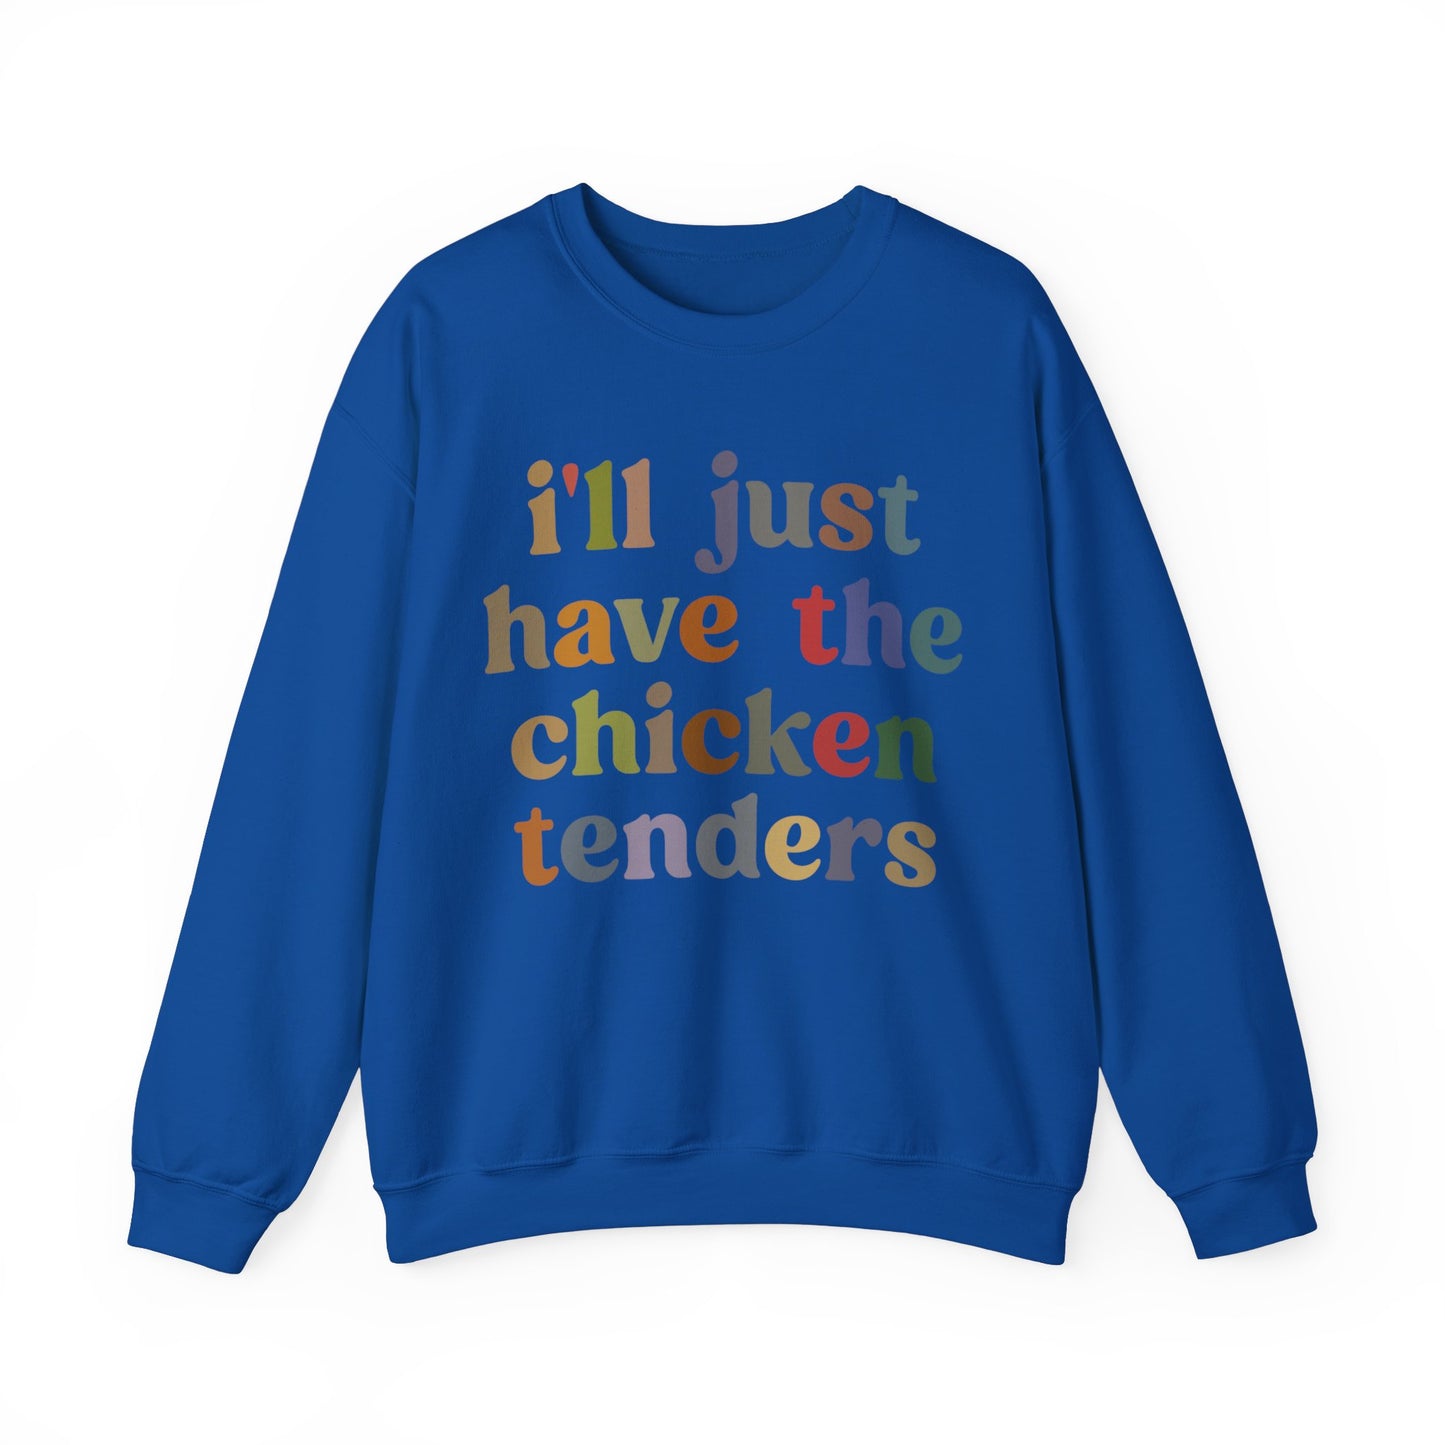 I'll Just Have The Chicken Tenders Sweatshirt, Chicken Nugget Lover Sweatshirt, Funny Sayings Short Sweatshirt, Sarcastic Sweatshirt, S1134